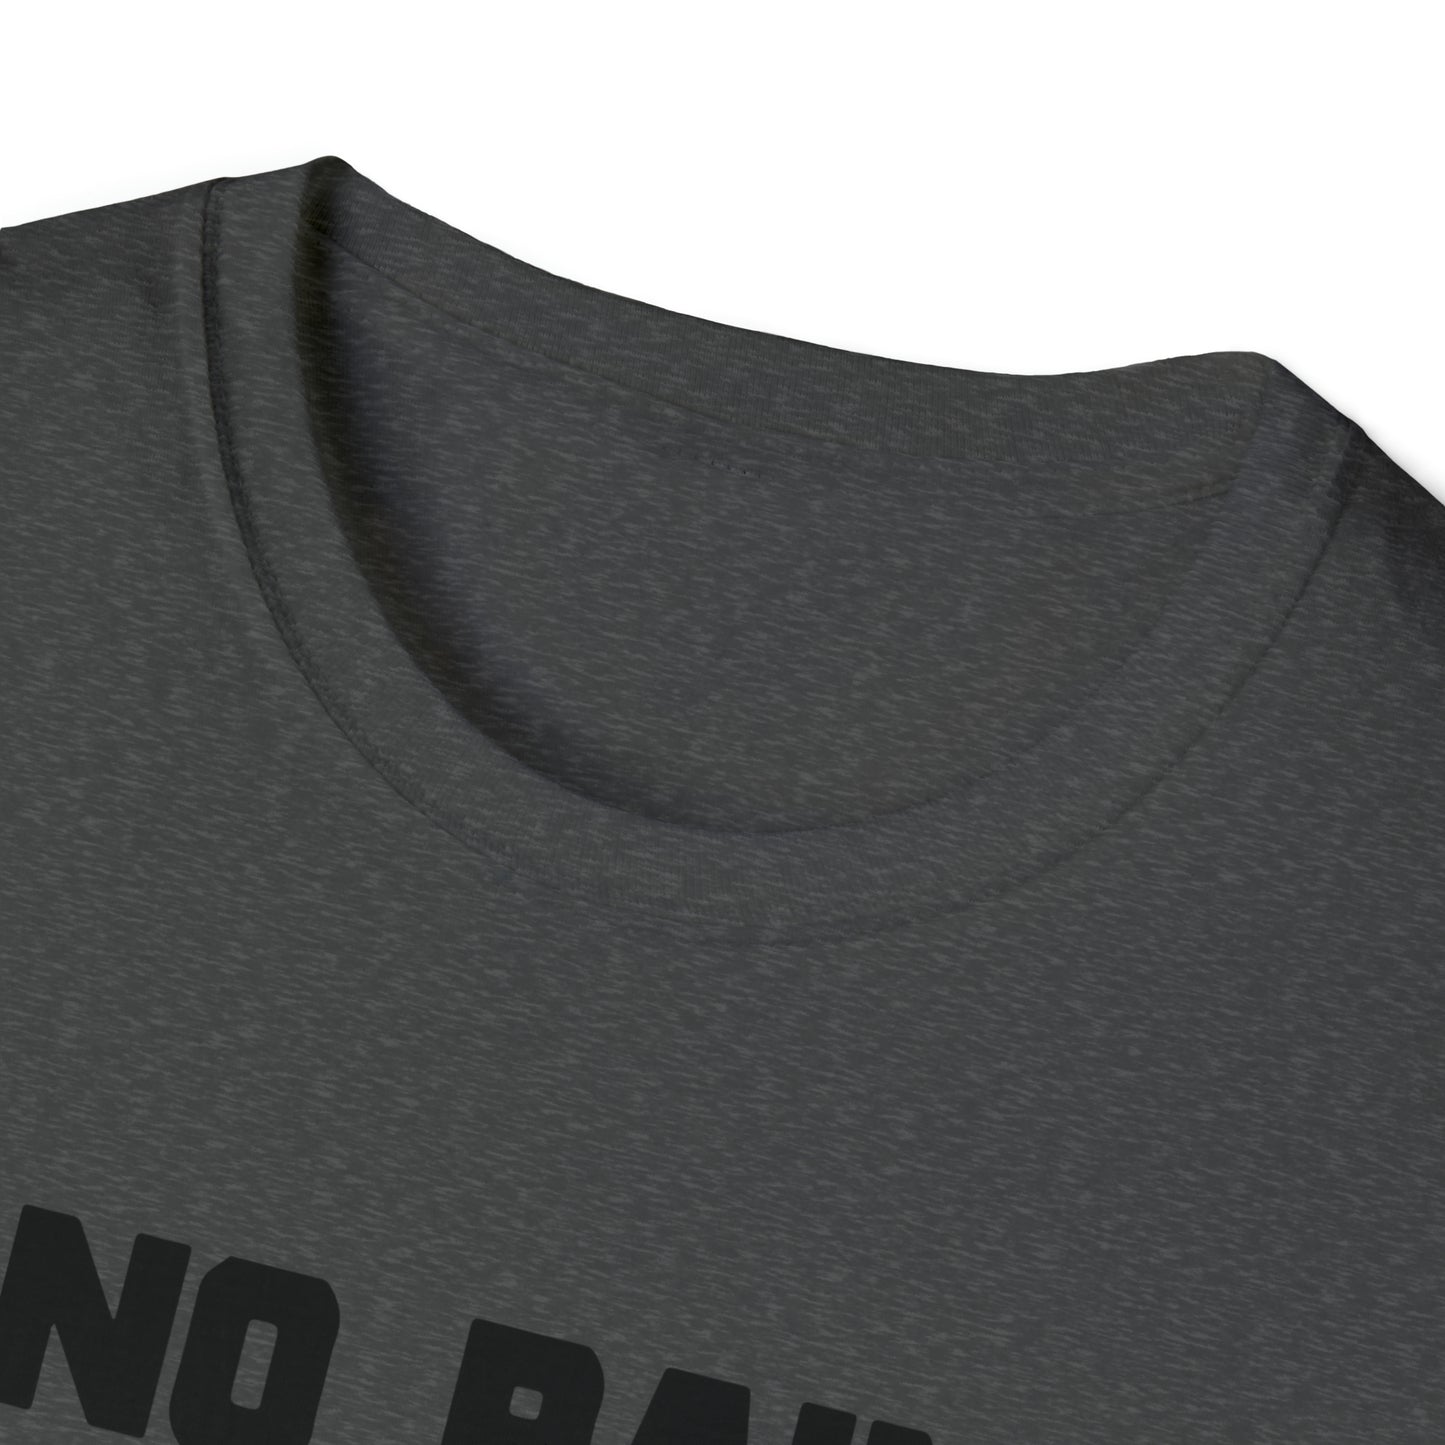 No Pain, No Gain - Softstyle T-Shirt